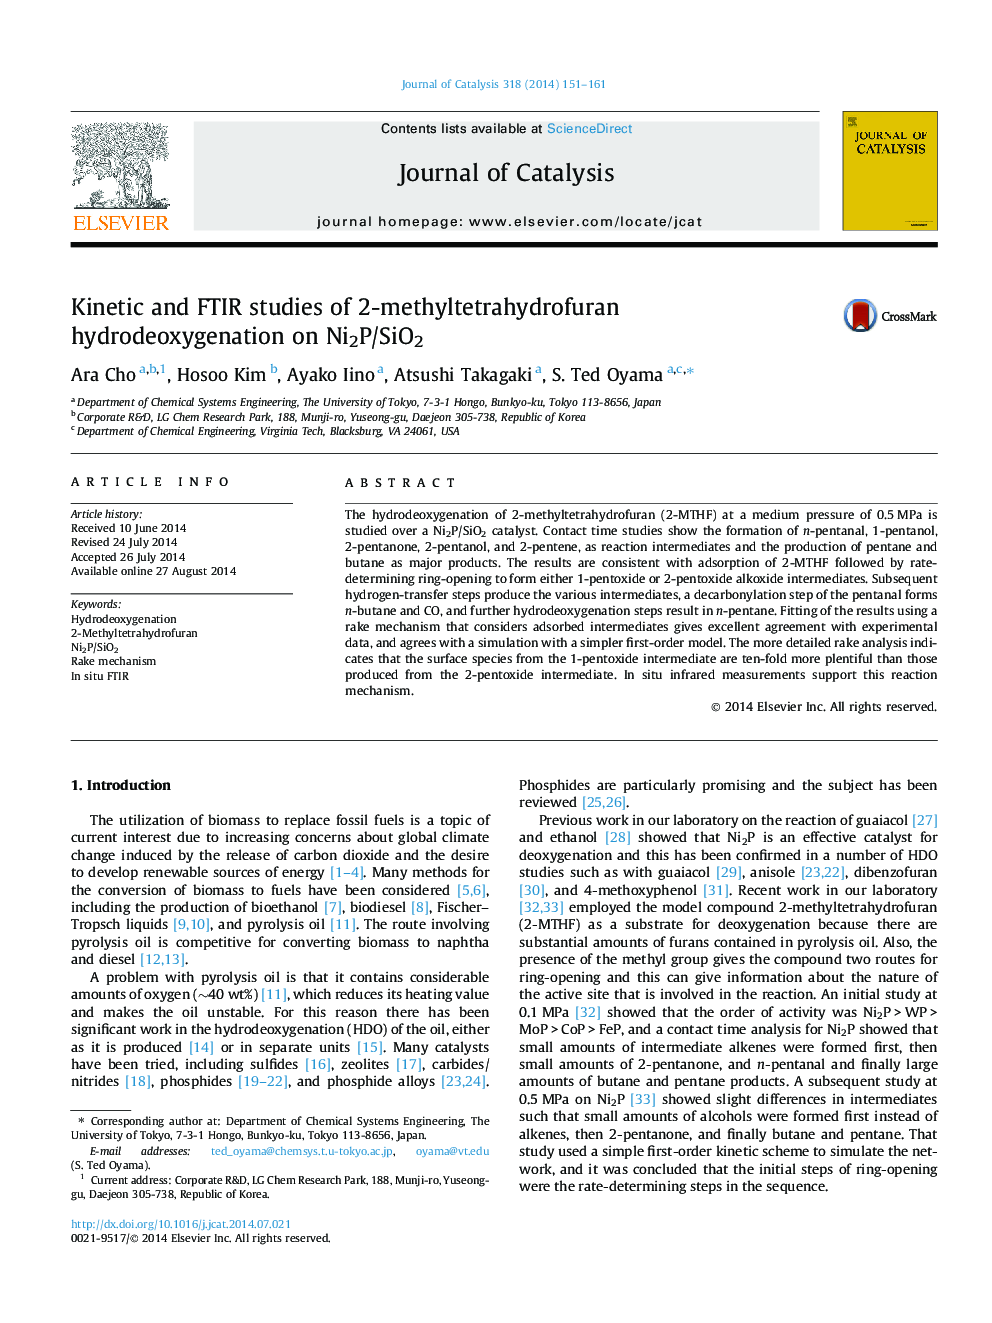 Kinetic and FTIR studies of 2-methyltetrahydrofuran hydrodeoxygenation on Ni2P/SiO2